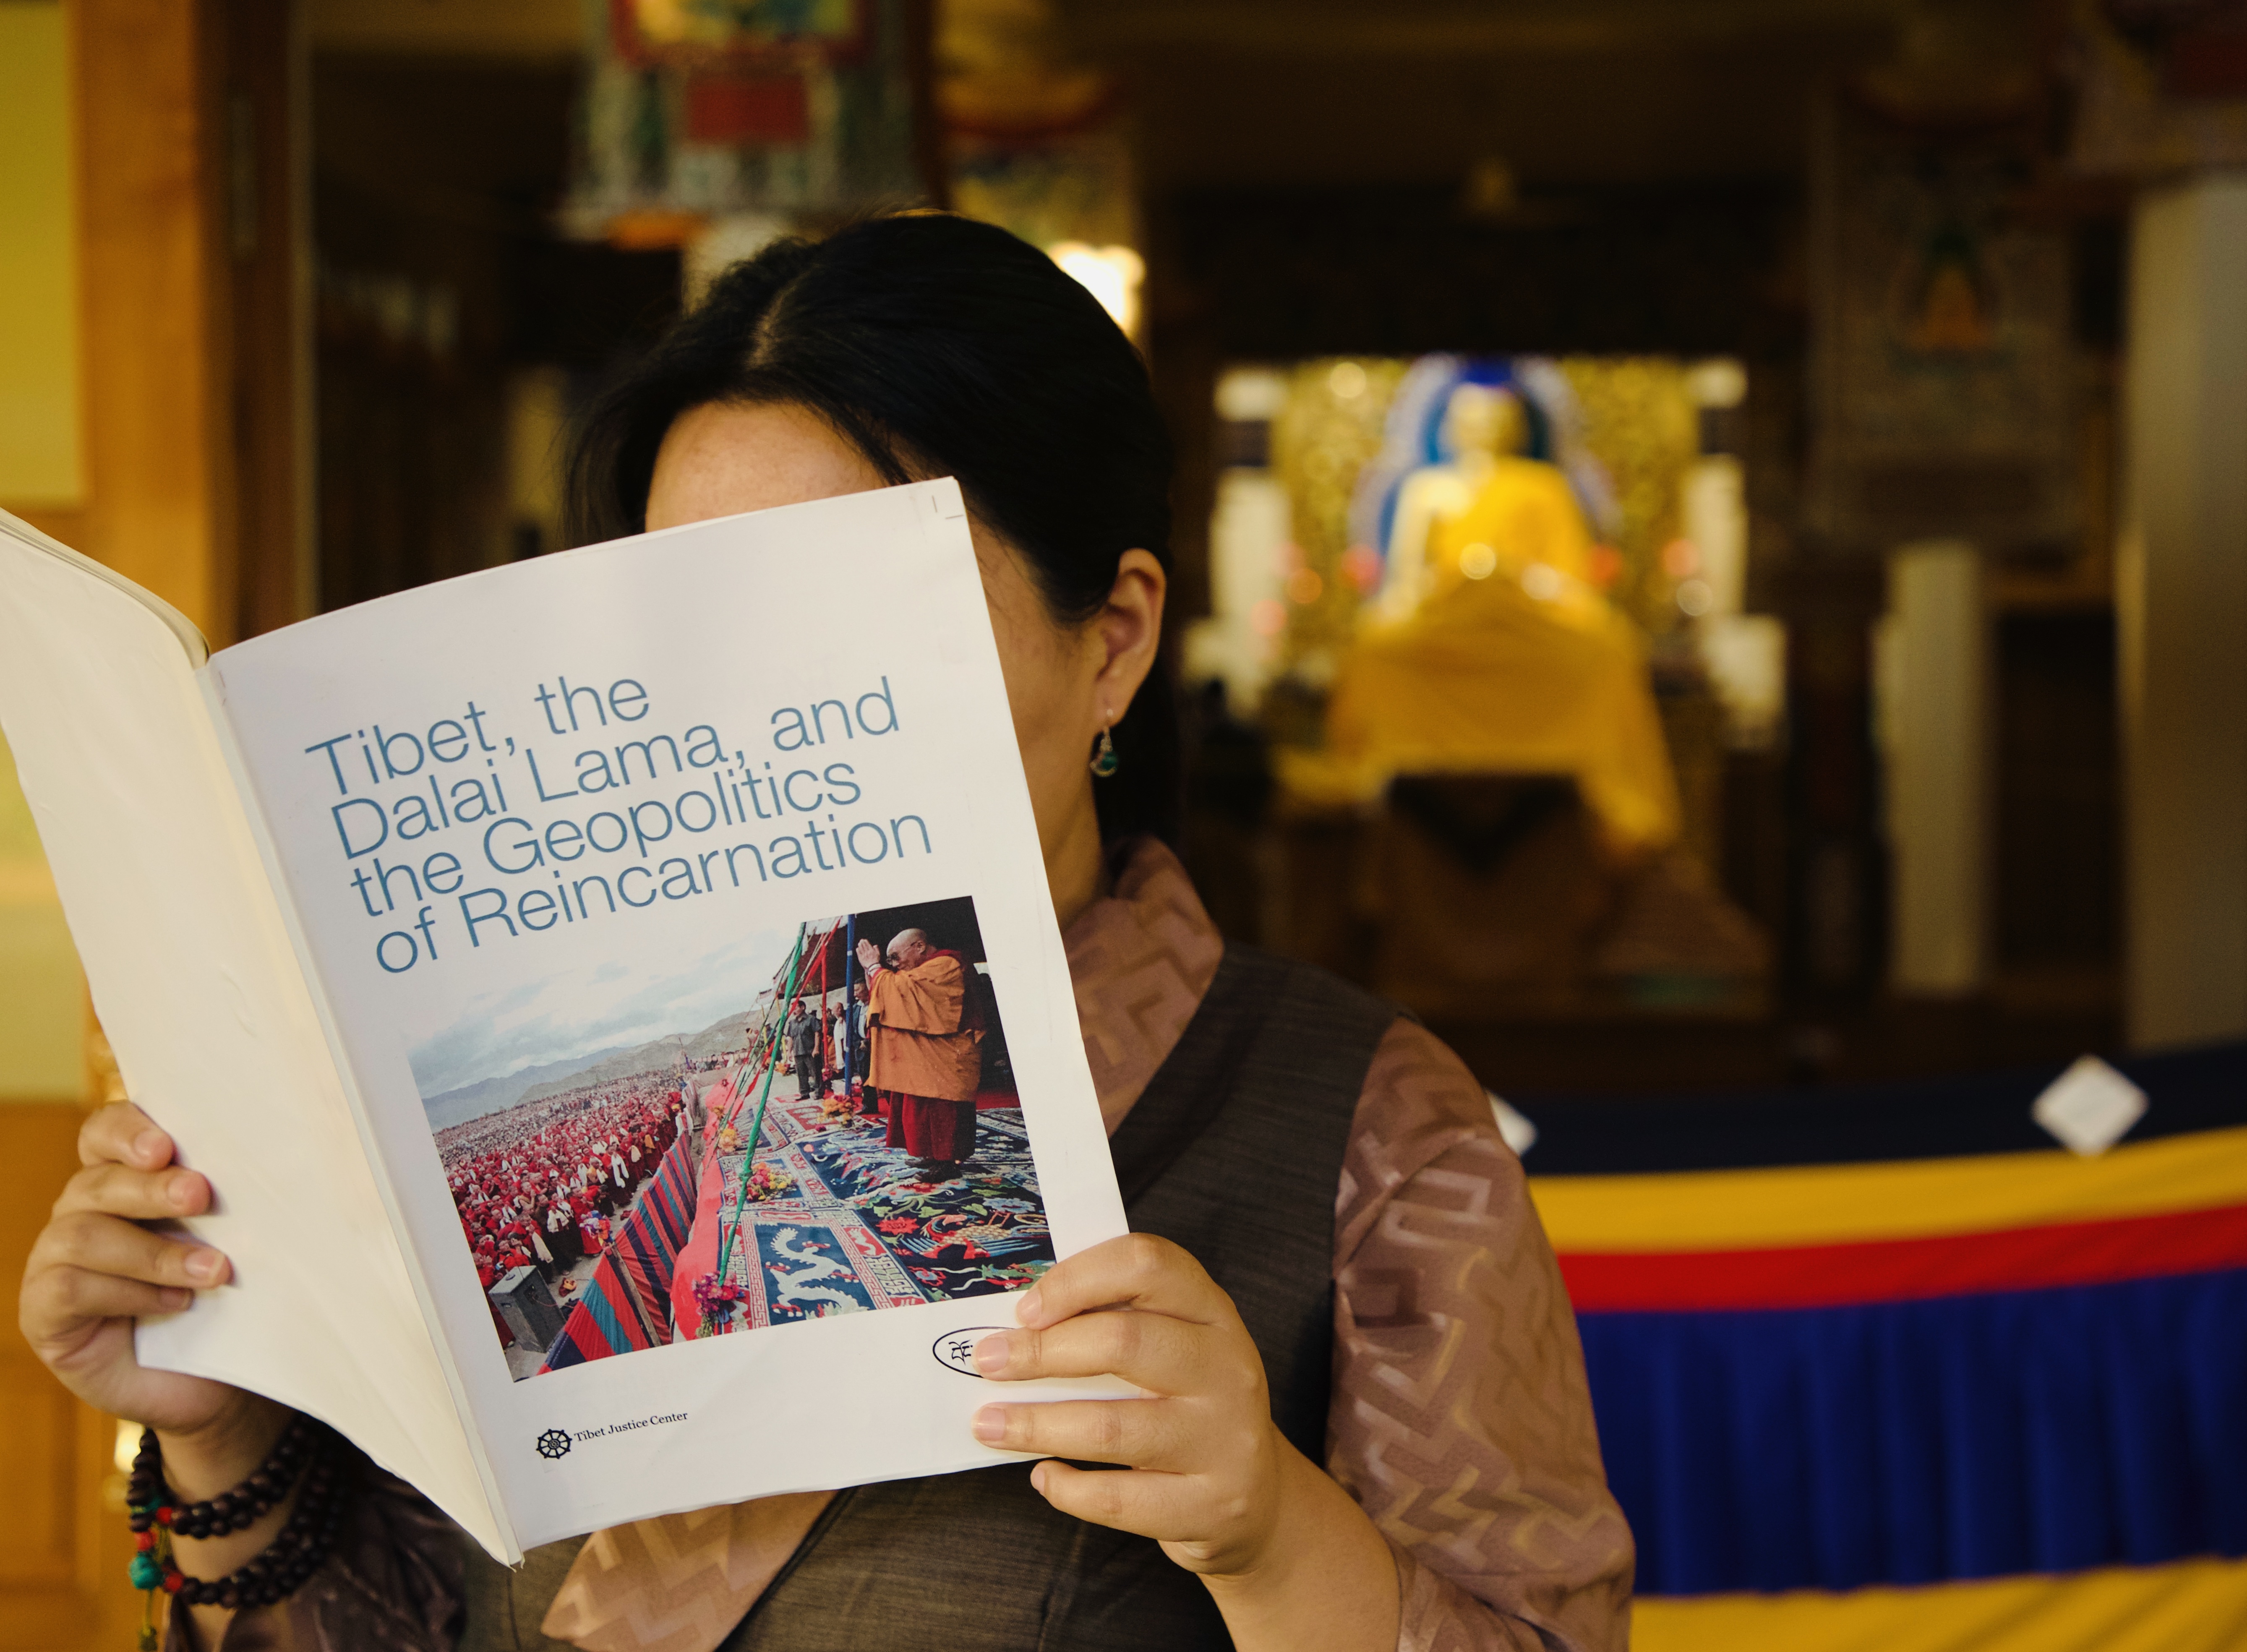 Tibetan in Dharamsala reading the report 'Tibet, the Dalai Lama and the Geopolitics of Reincarnation.'